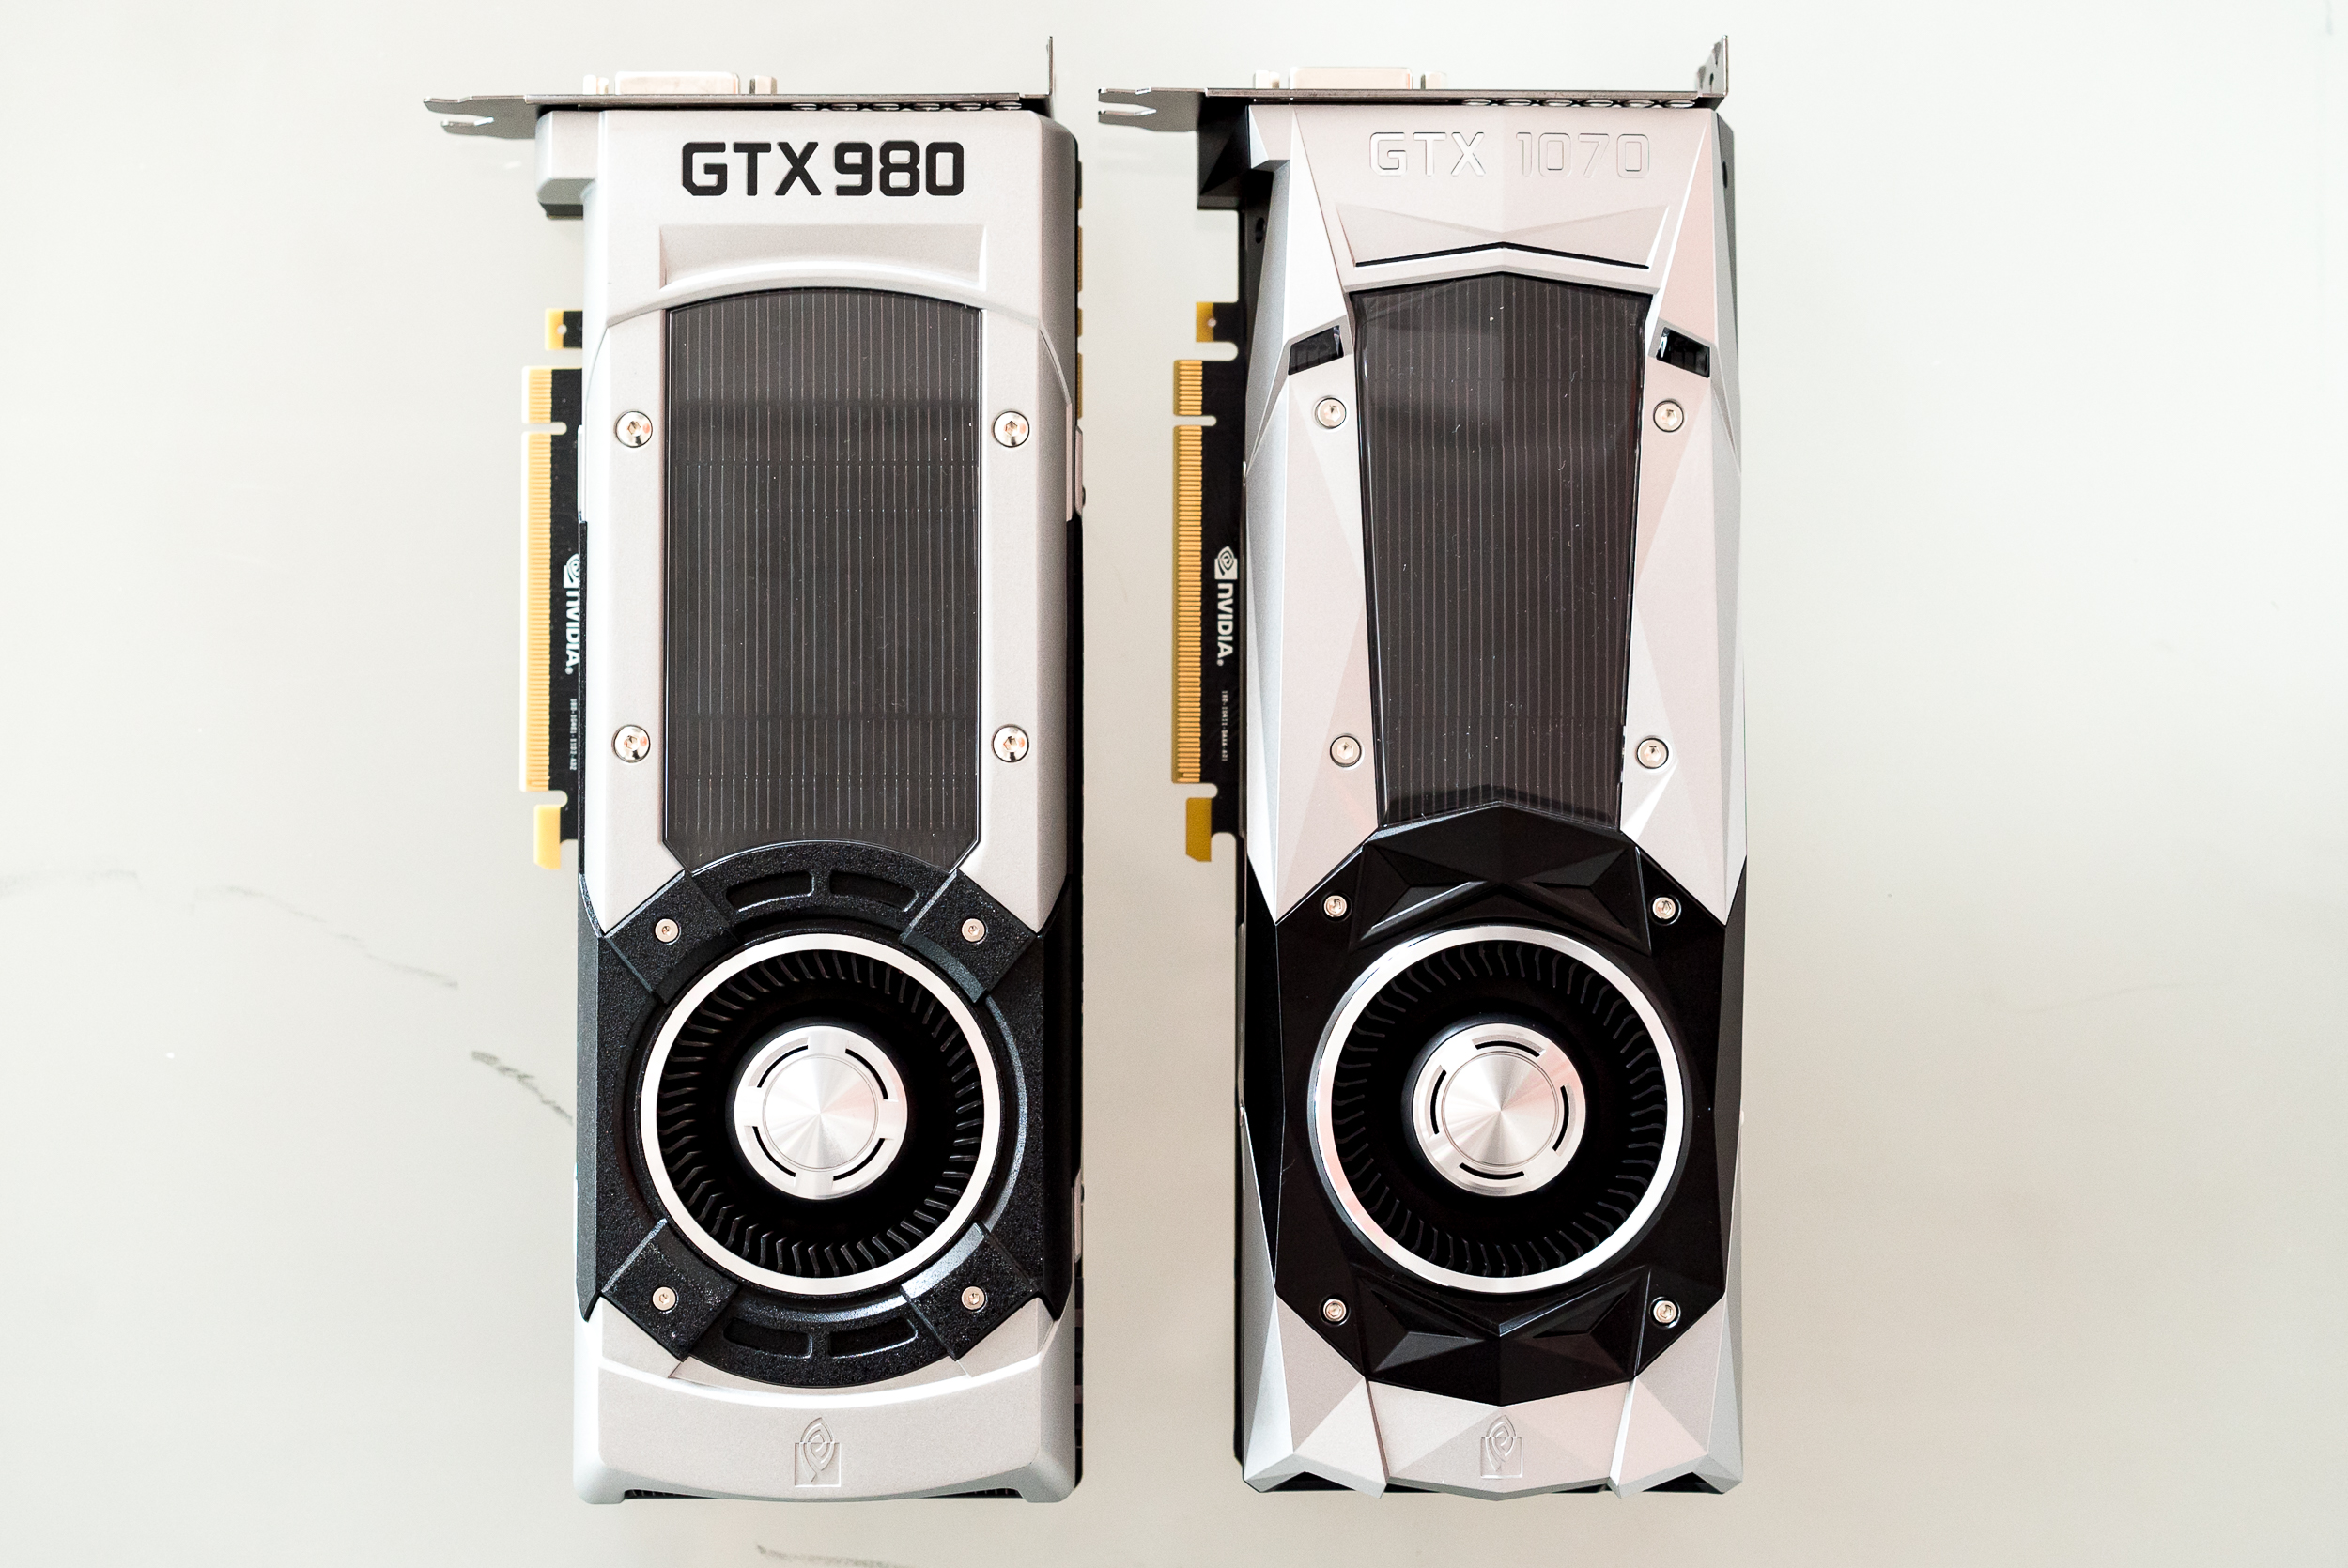 Nvidia GTX 1070 review: Faster than the Titan, at a more reasonable